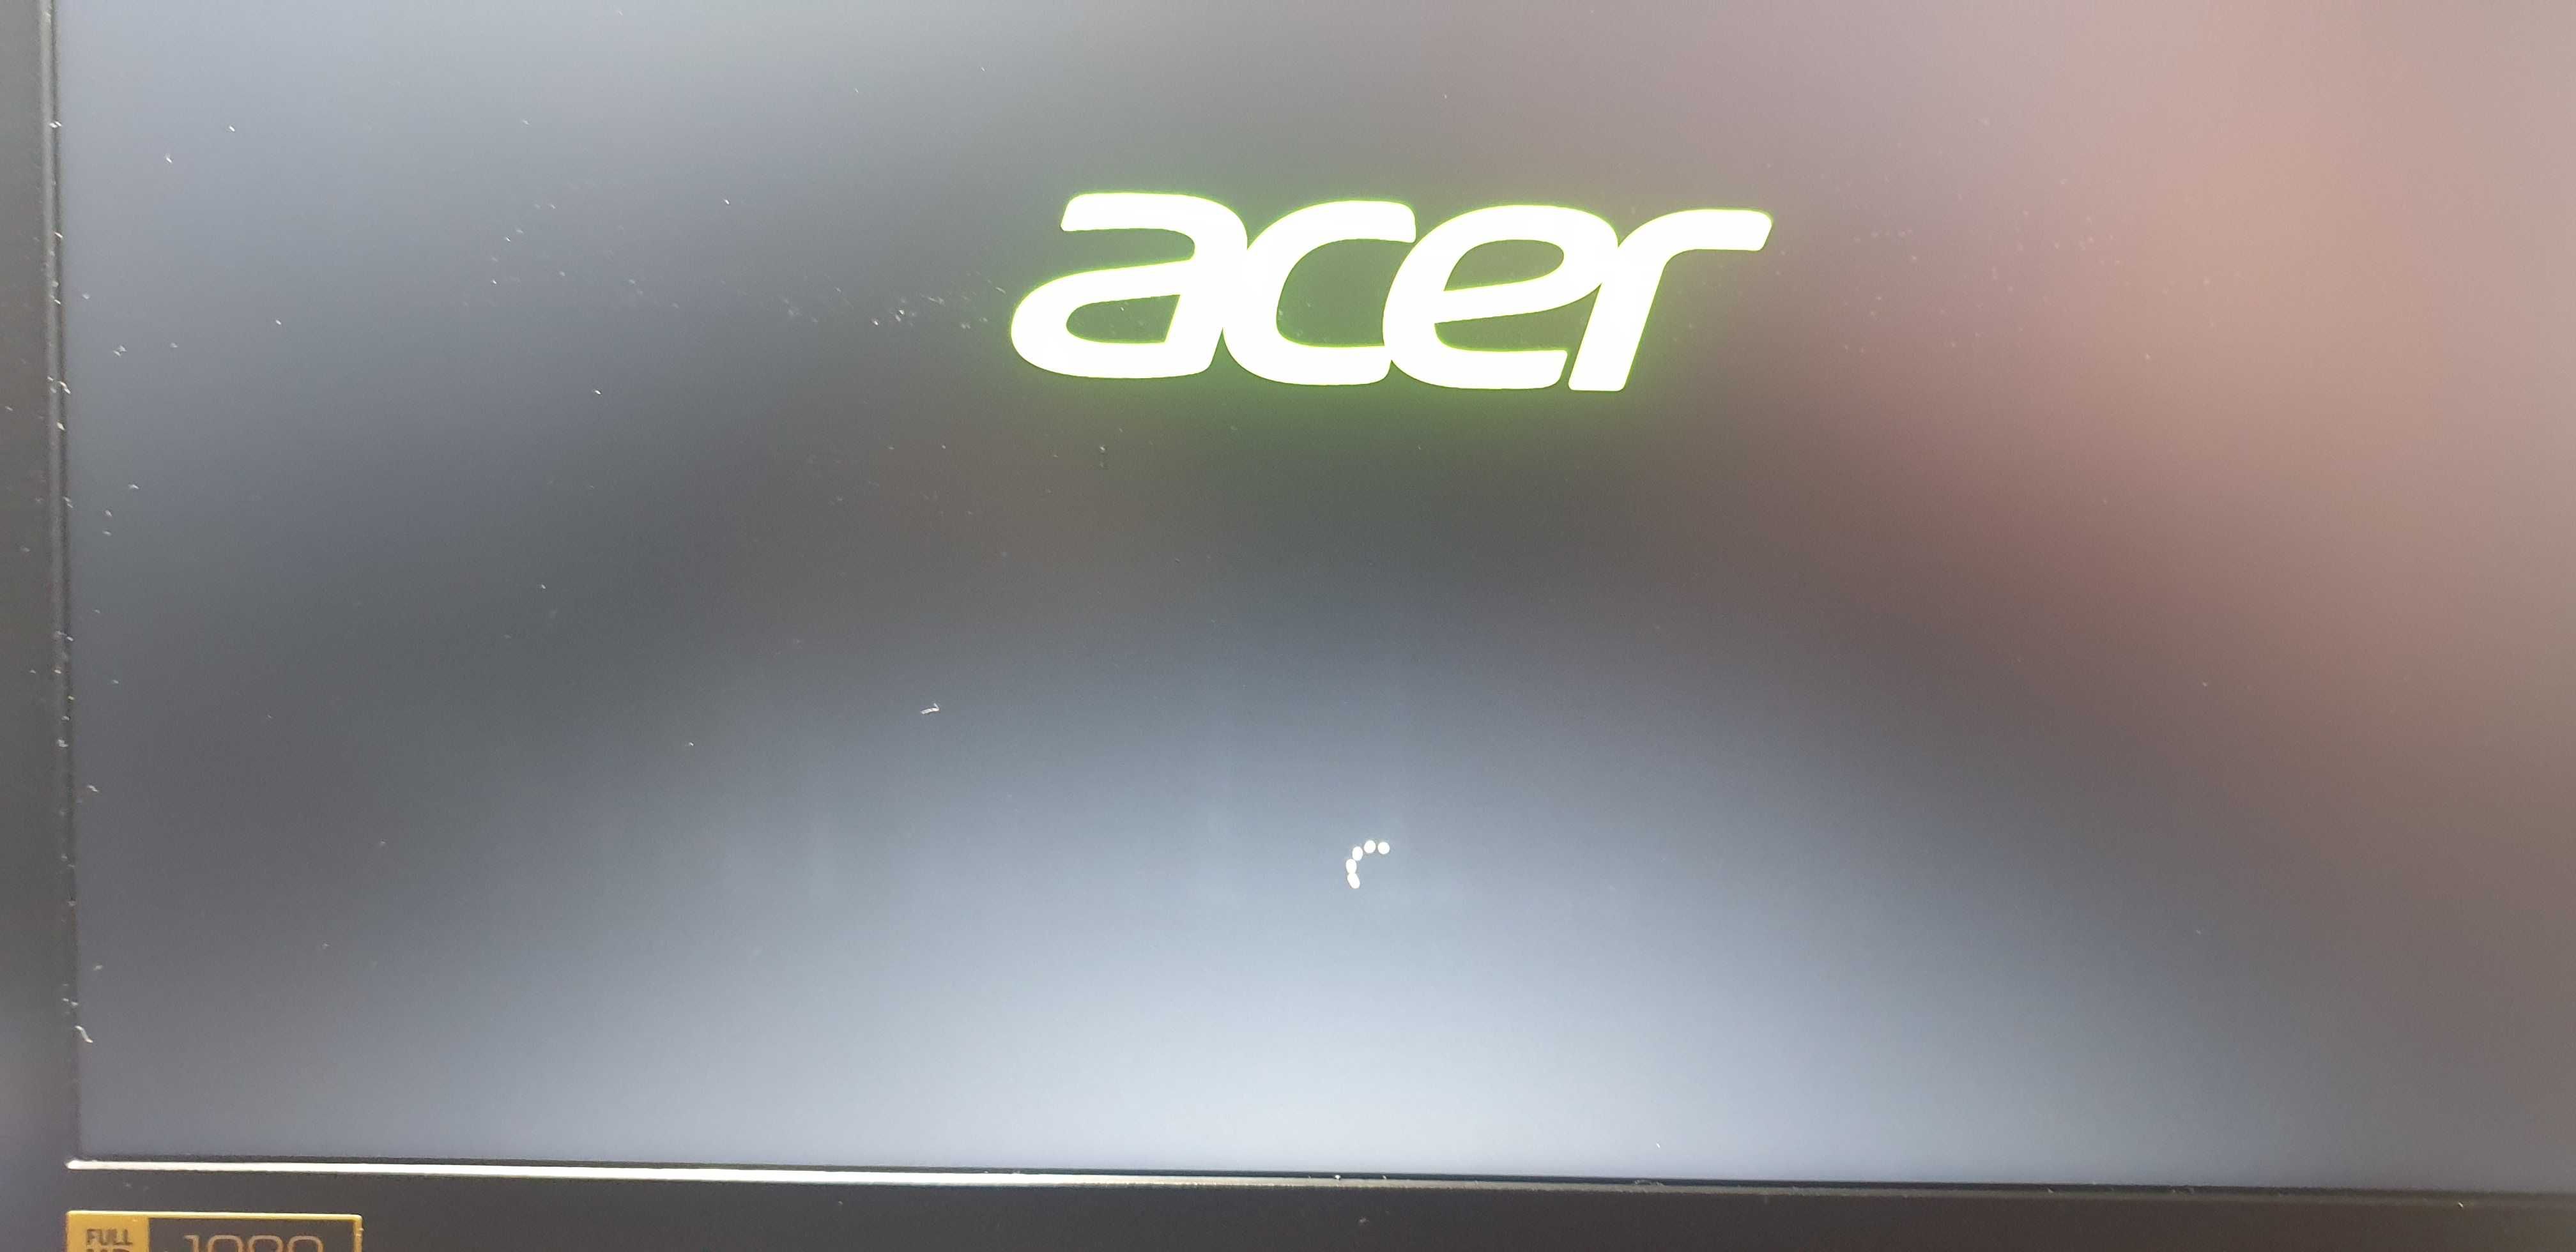 Acer Aspire VX15 i5 8GB GTX1050  FHD MAT W10 Gaming